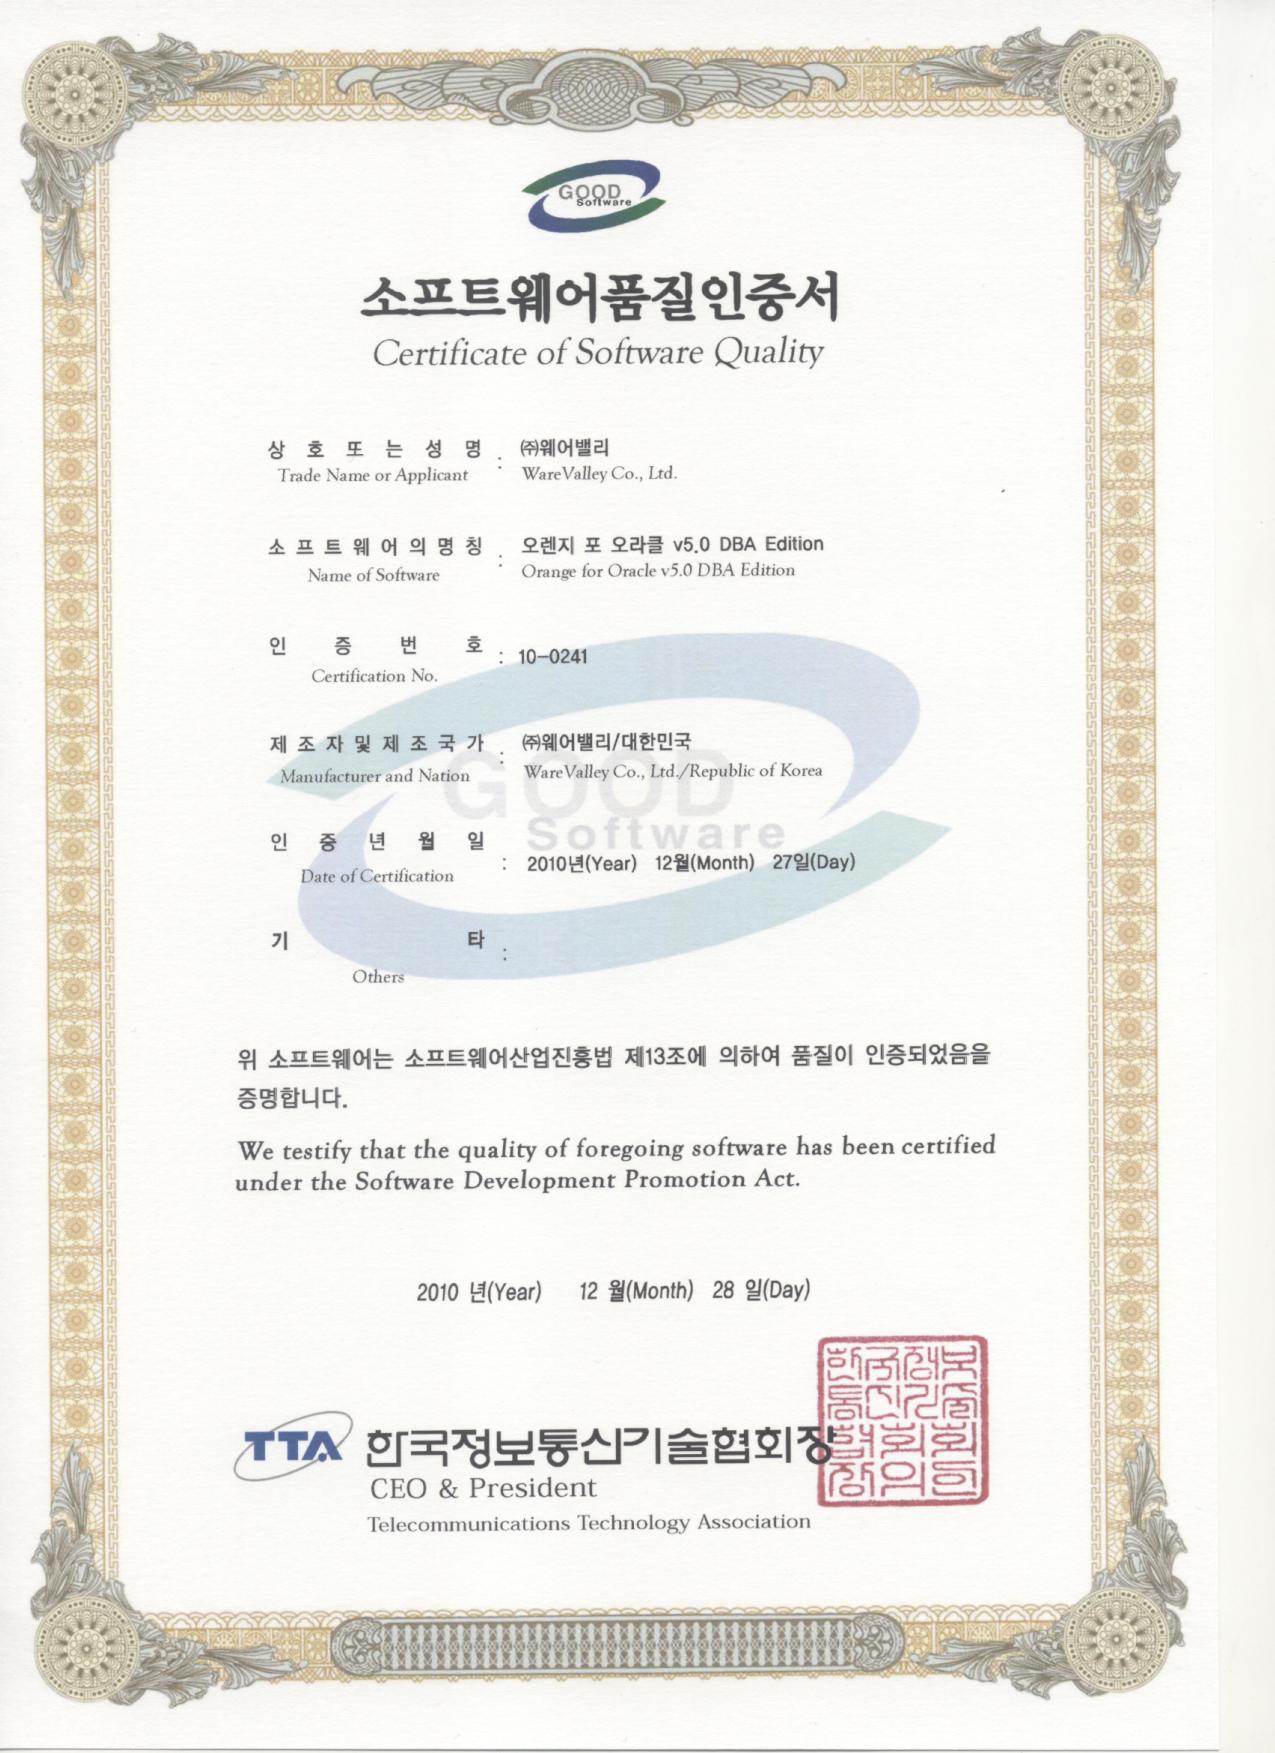 GS certification 10-0241